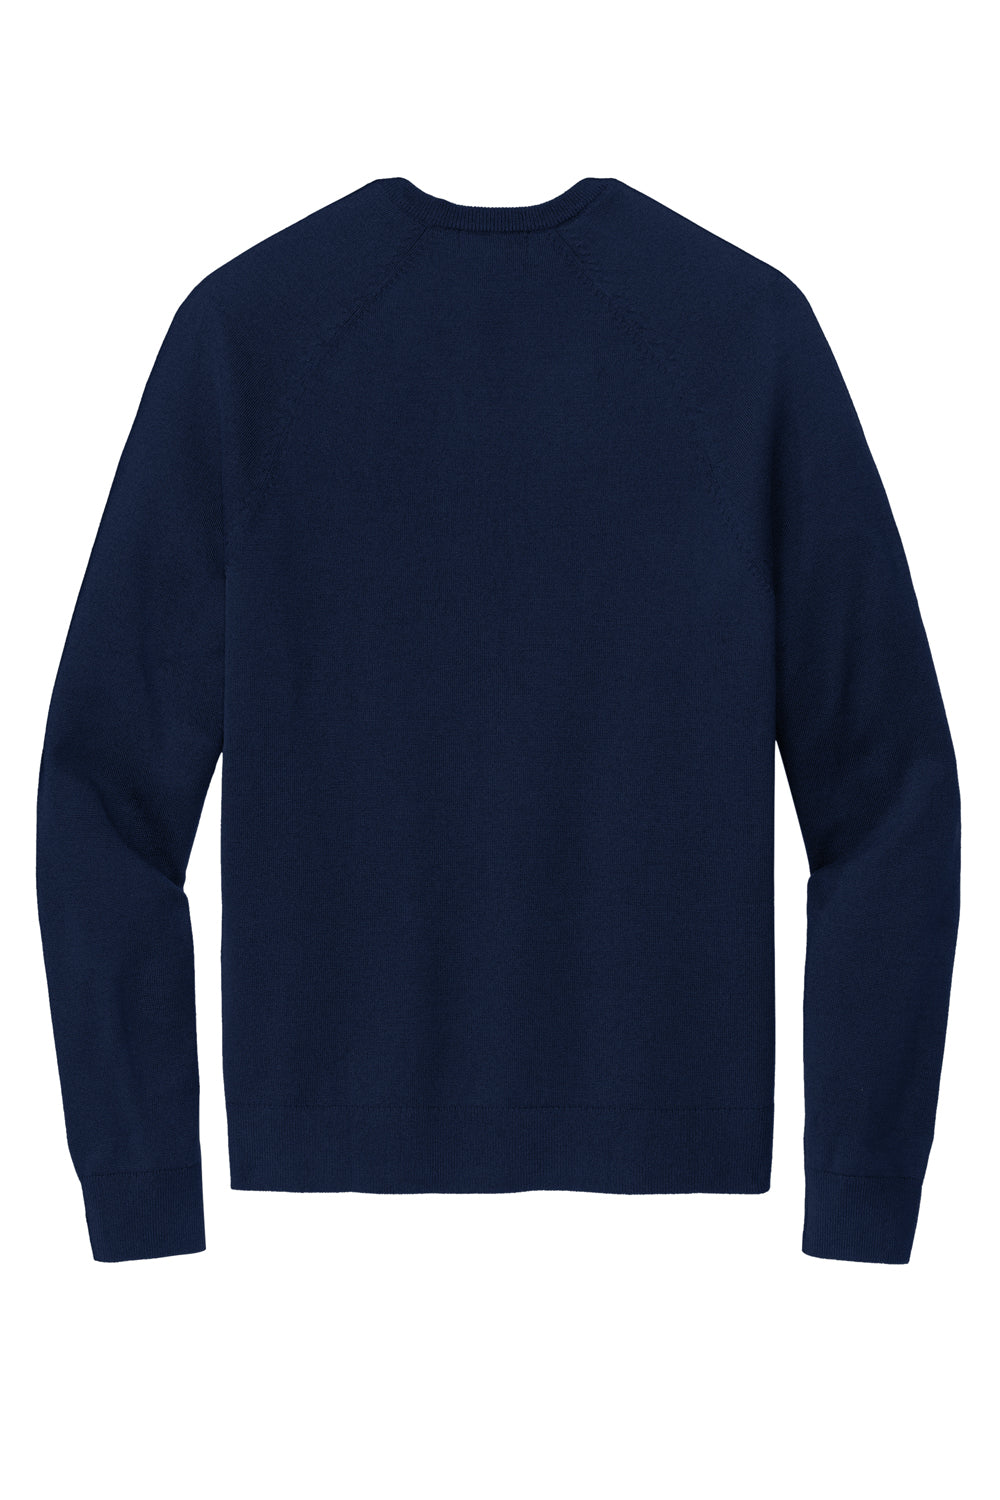 Brooks Brothers Mens Long Sleeve V-Neck Sweater Navy Blue Flat Back